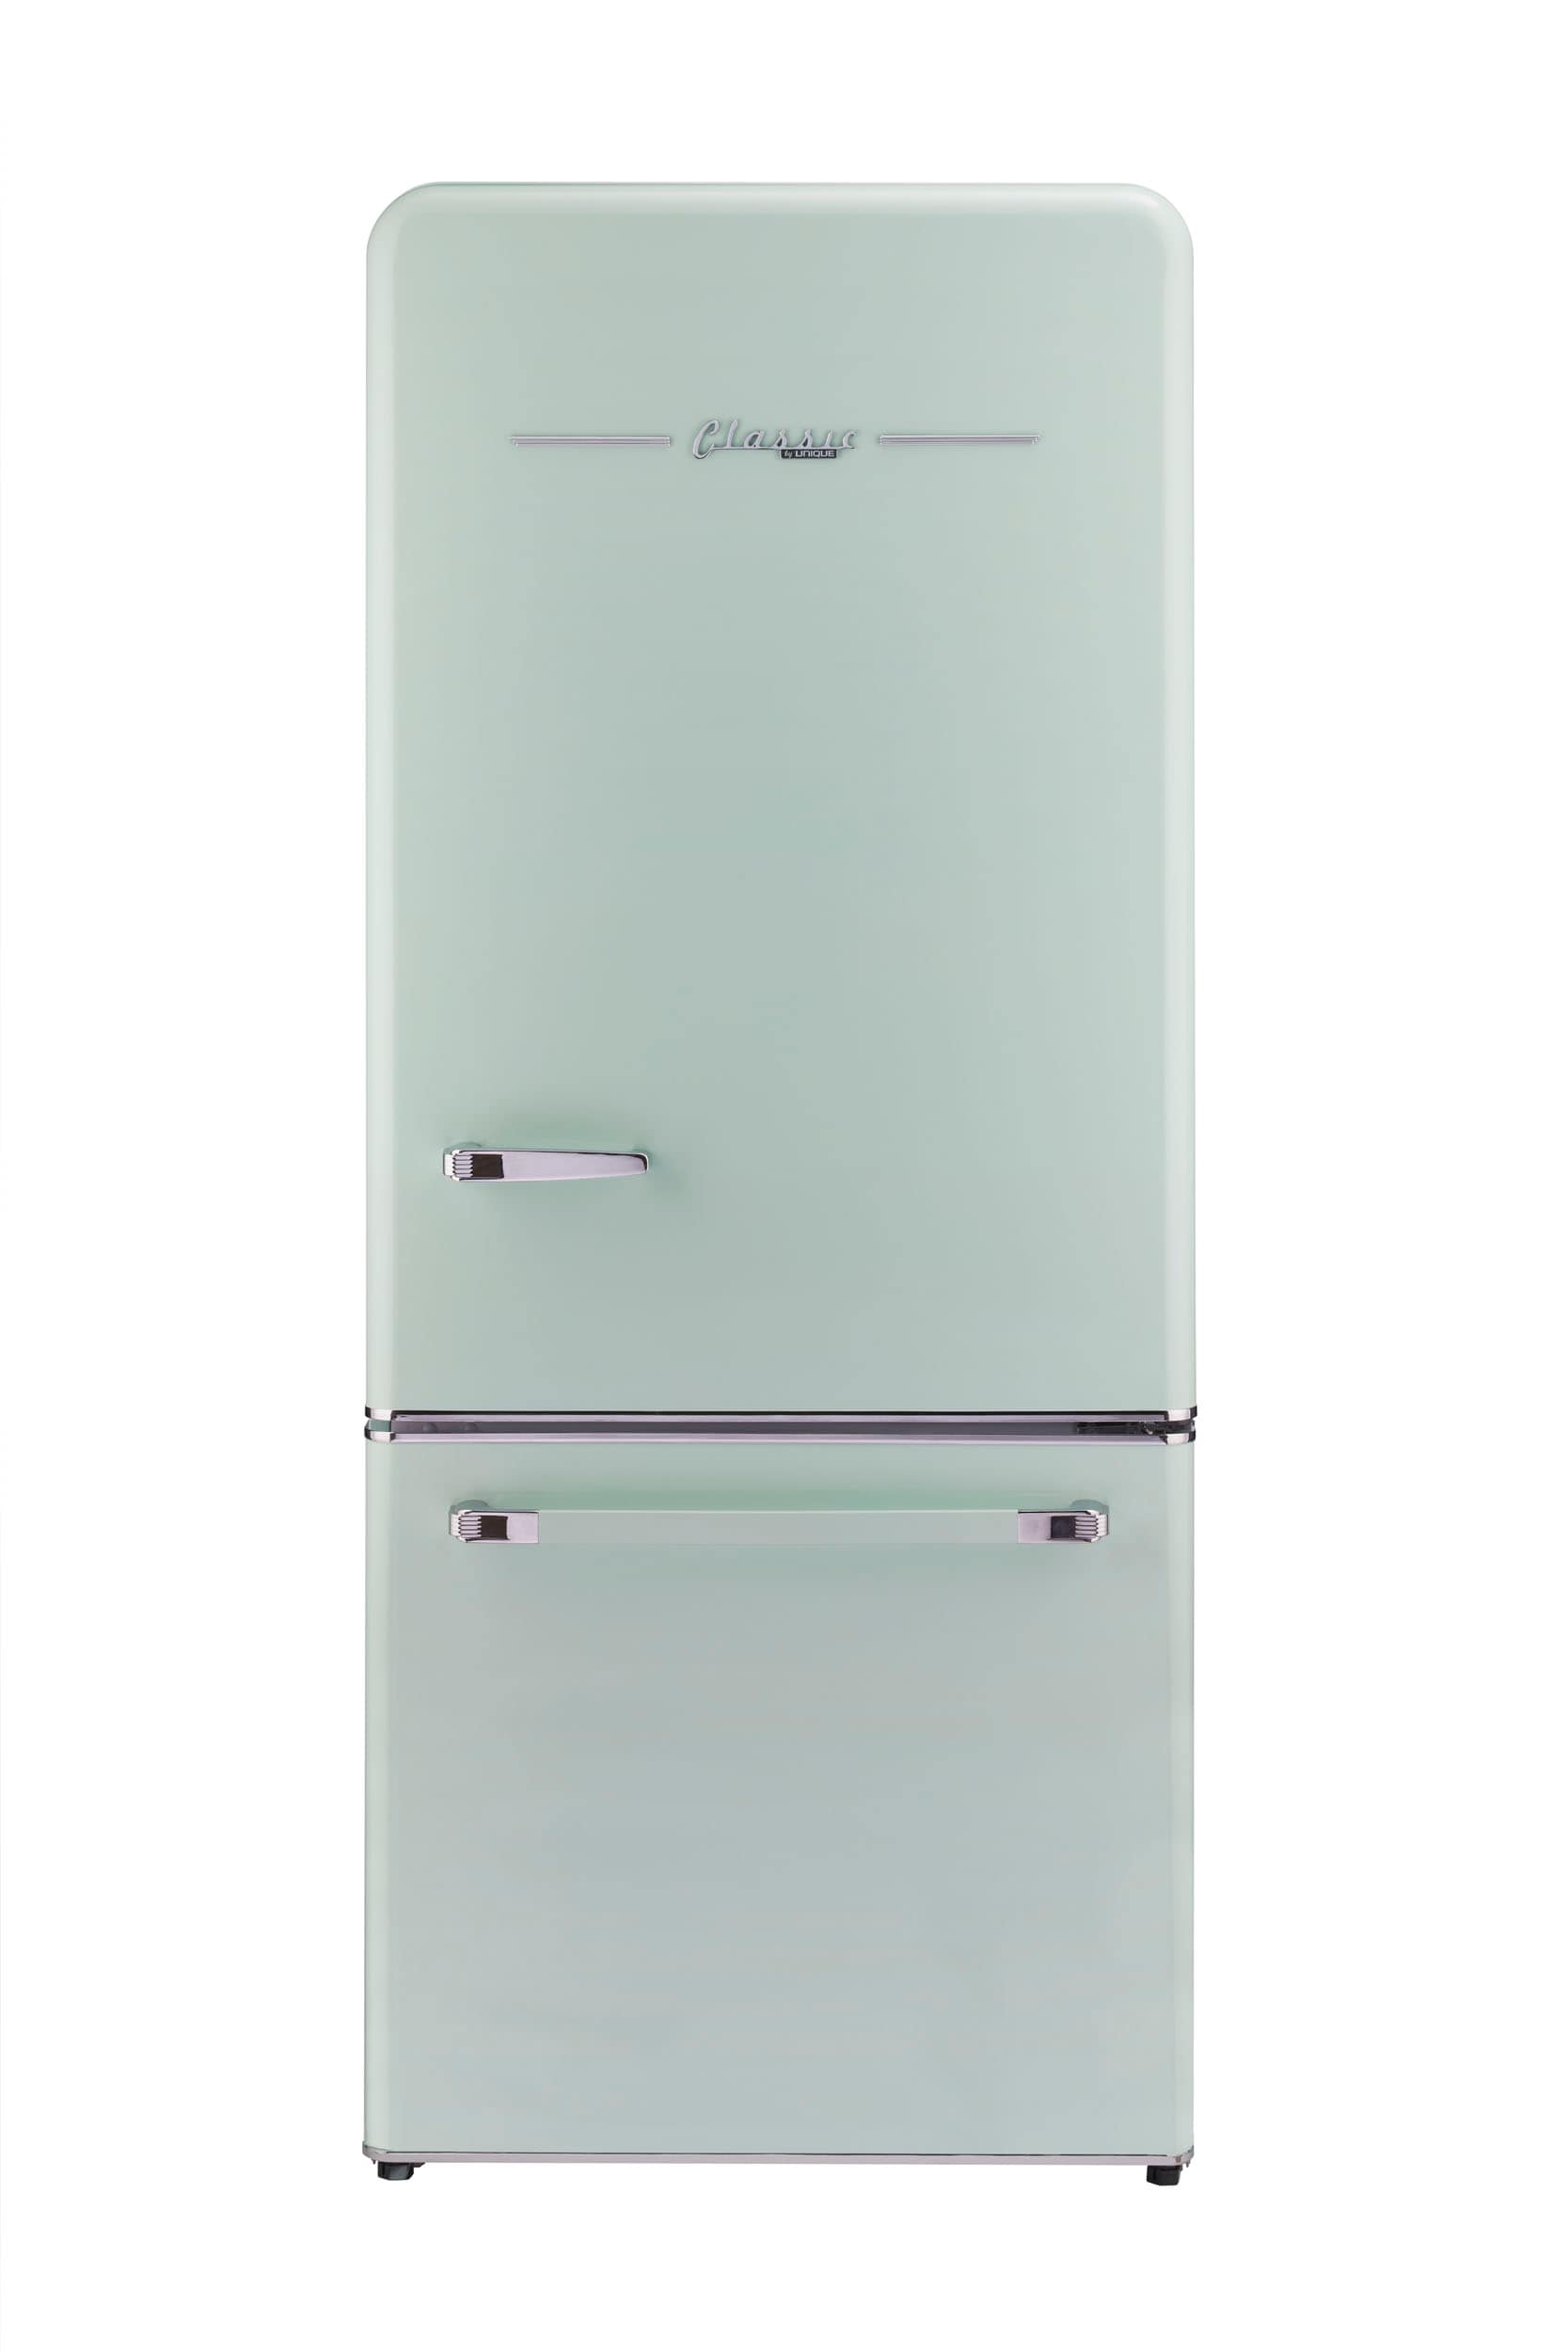 Retro Style Refrigerators